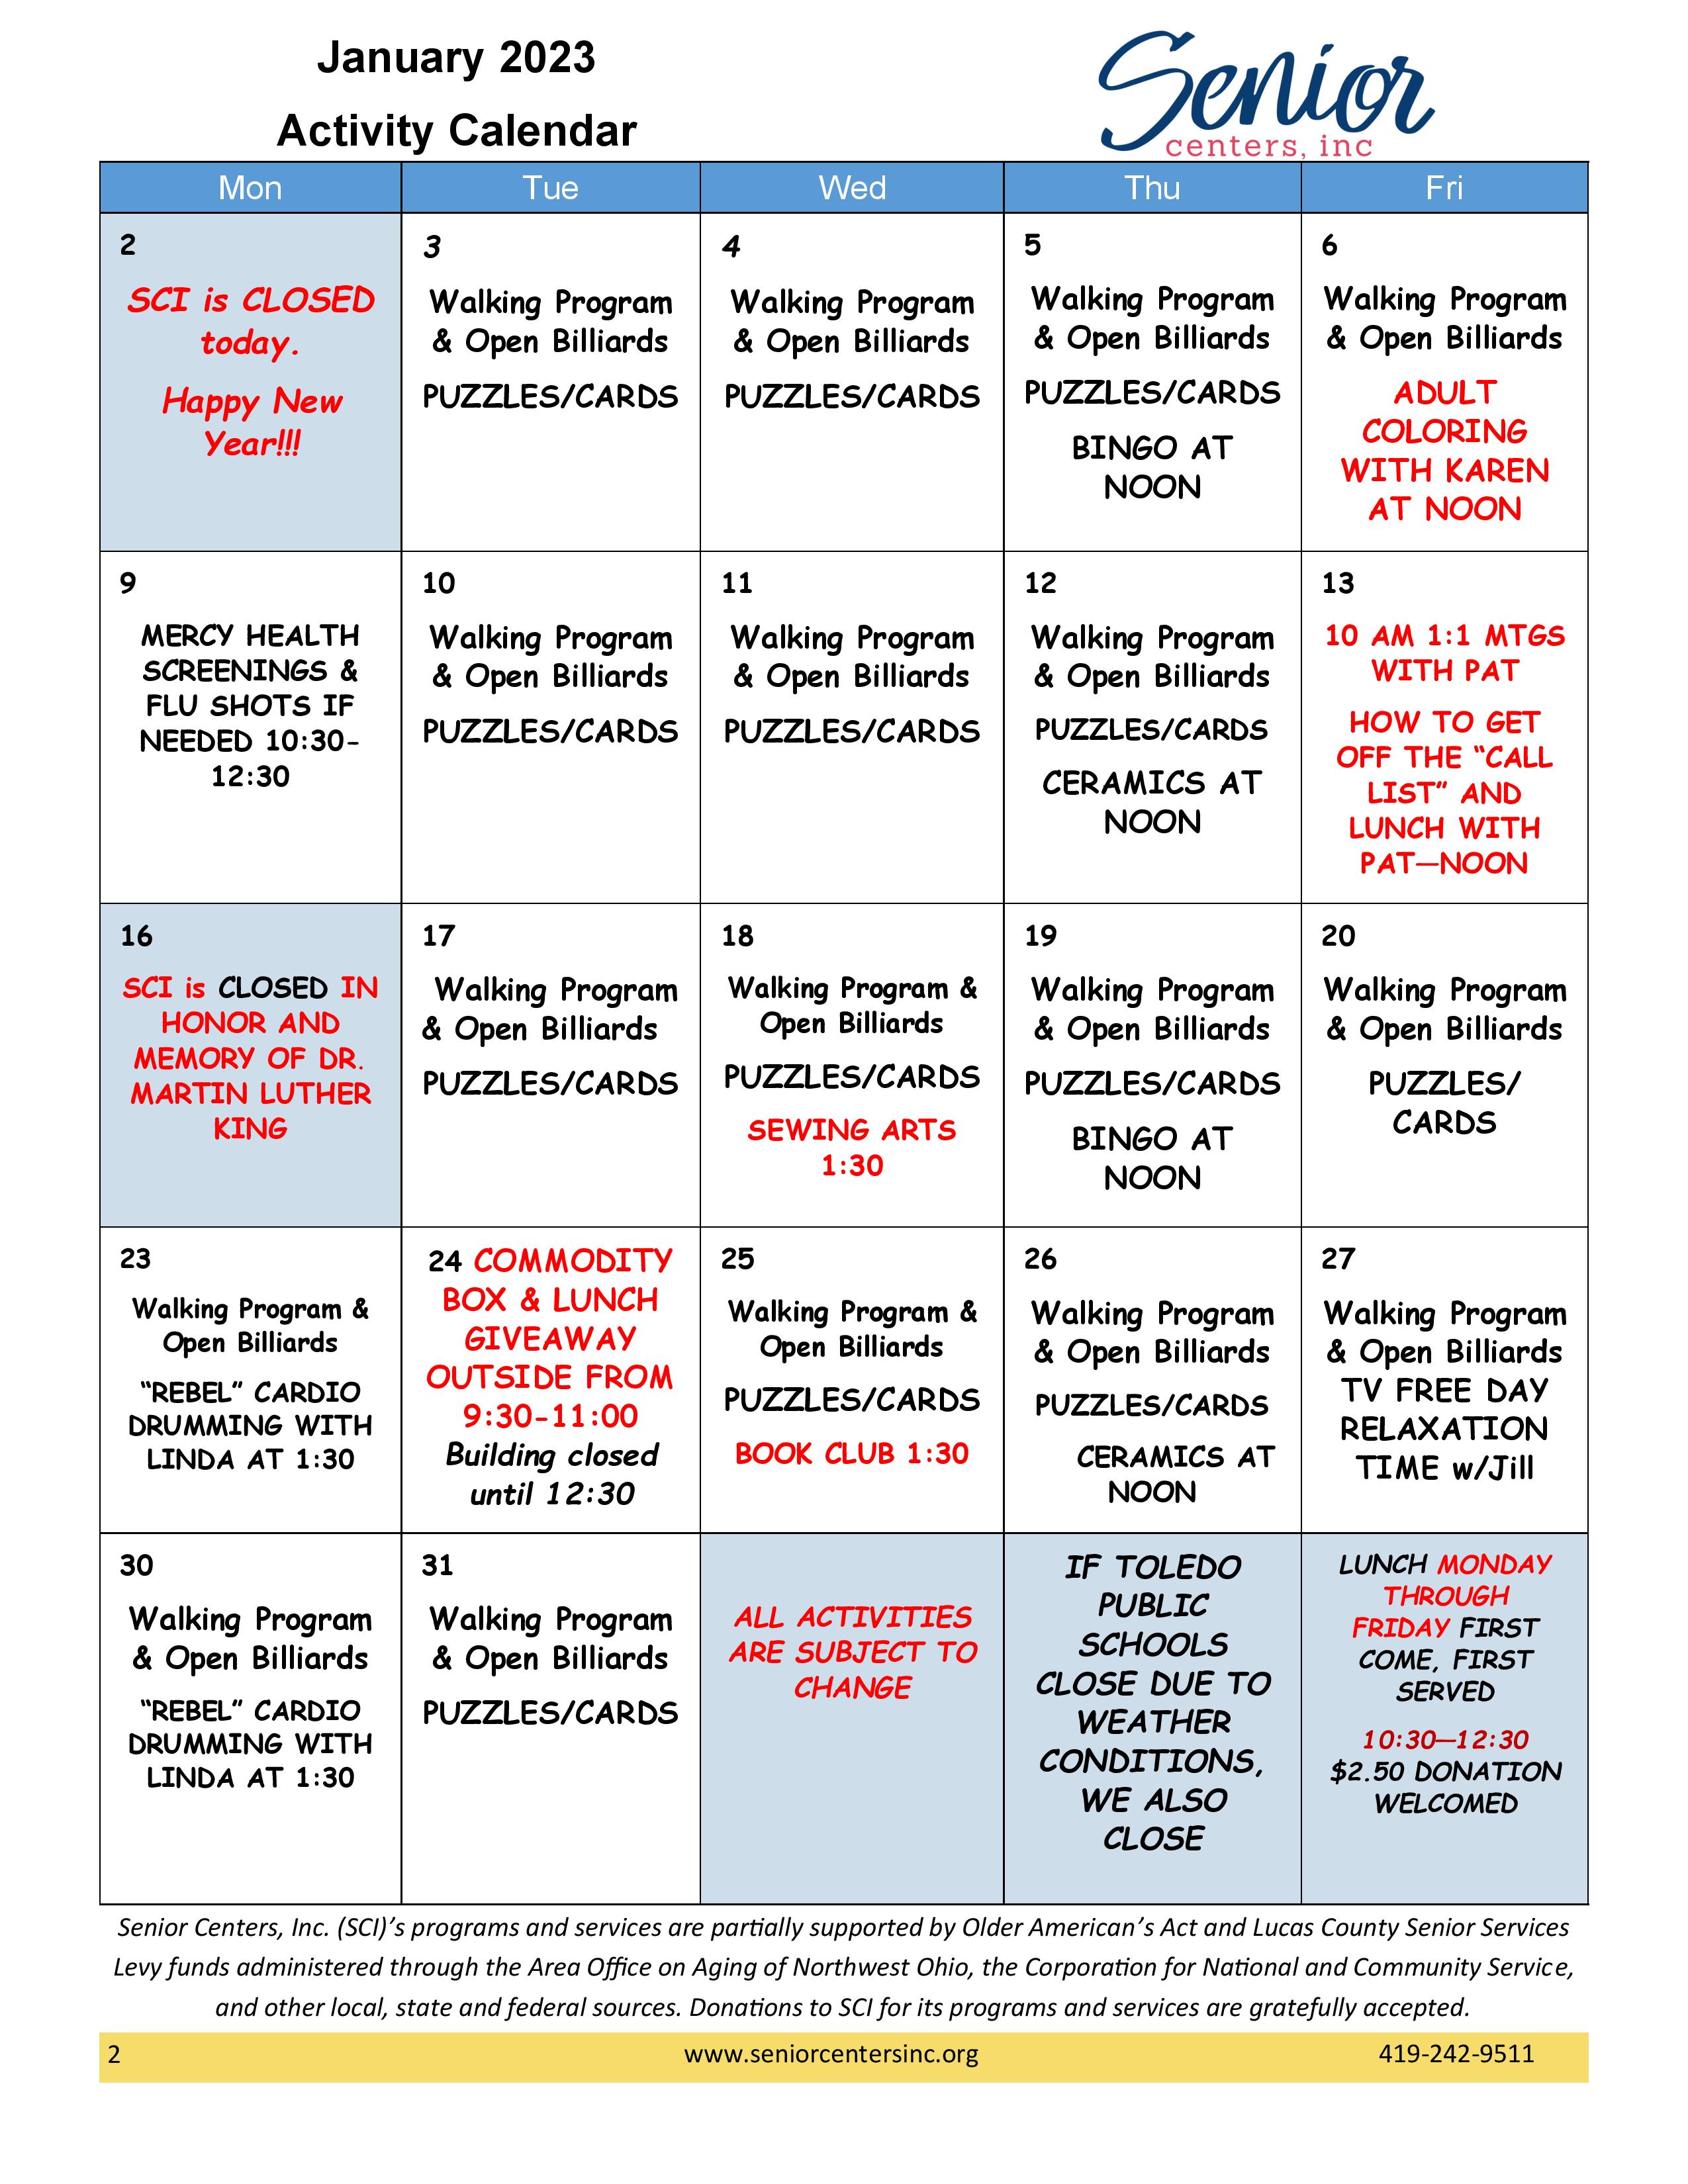 January 2023 Newsletter and Activity Calendar – Senior Centers, Inc.